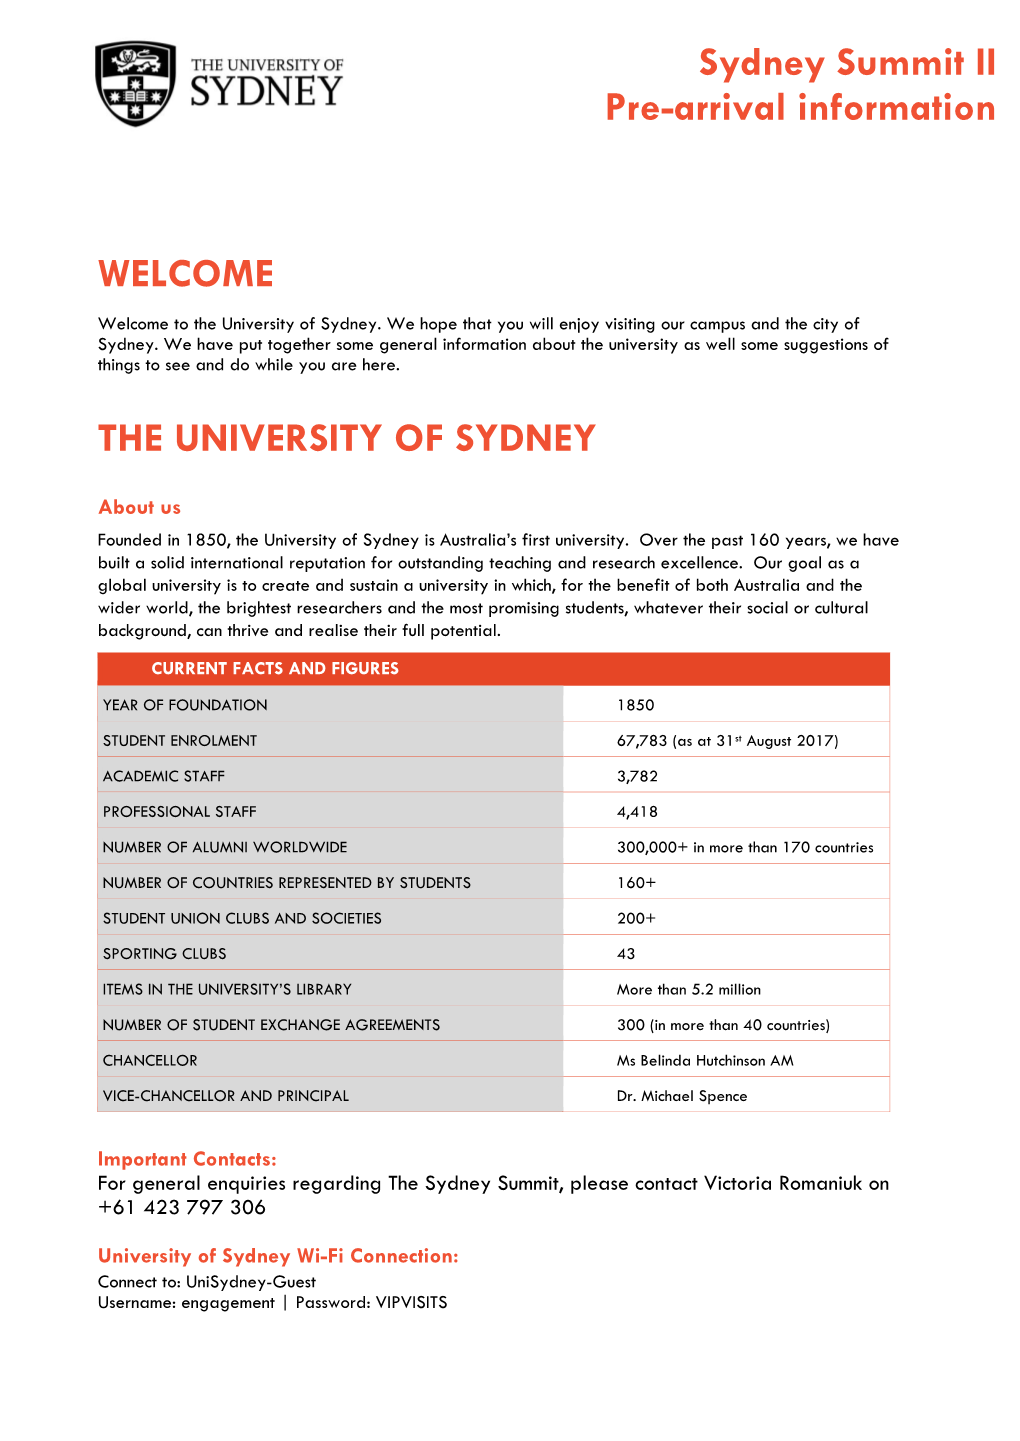 Sydney Summit II Pre-Arrival Information